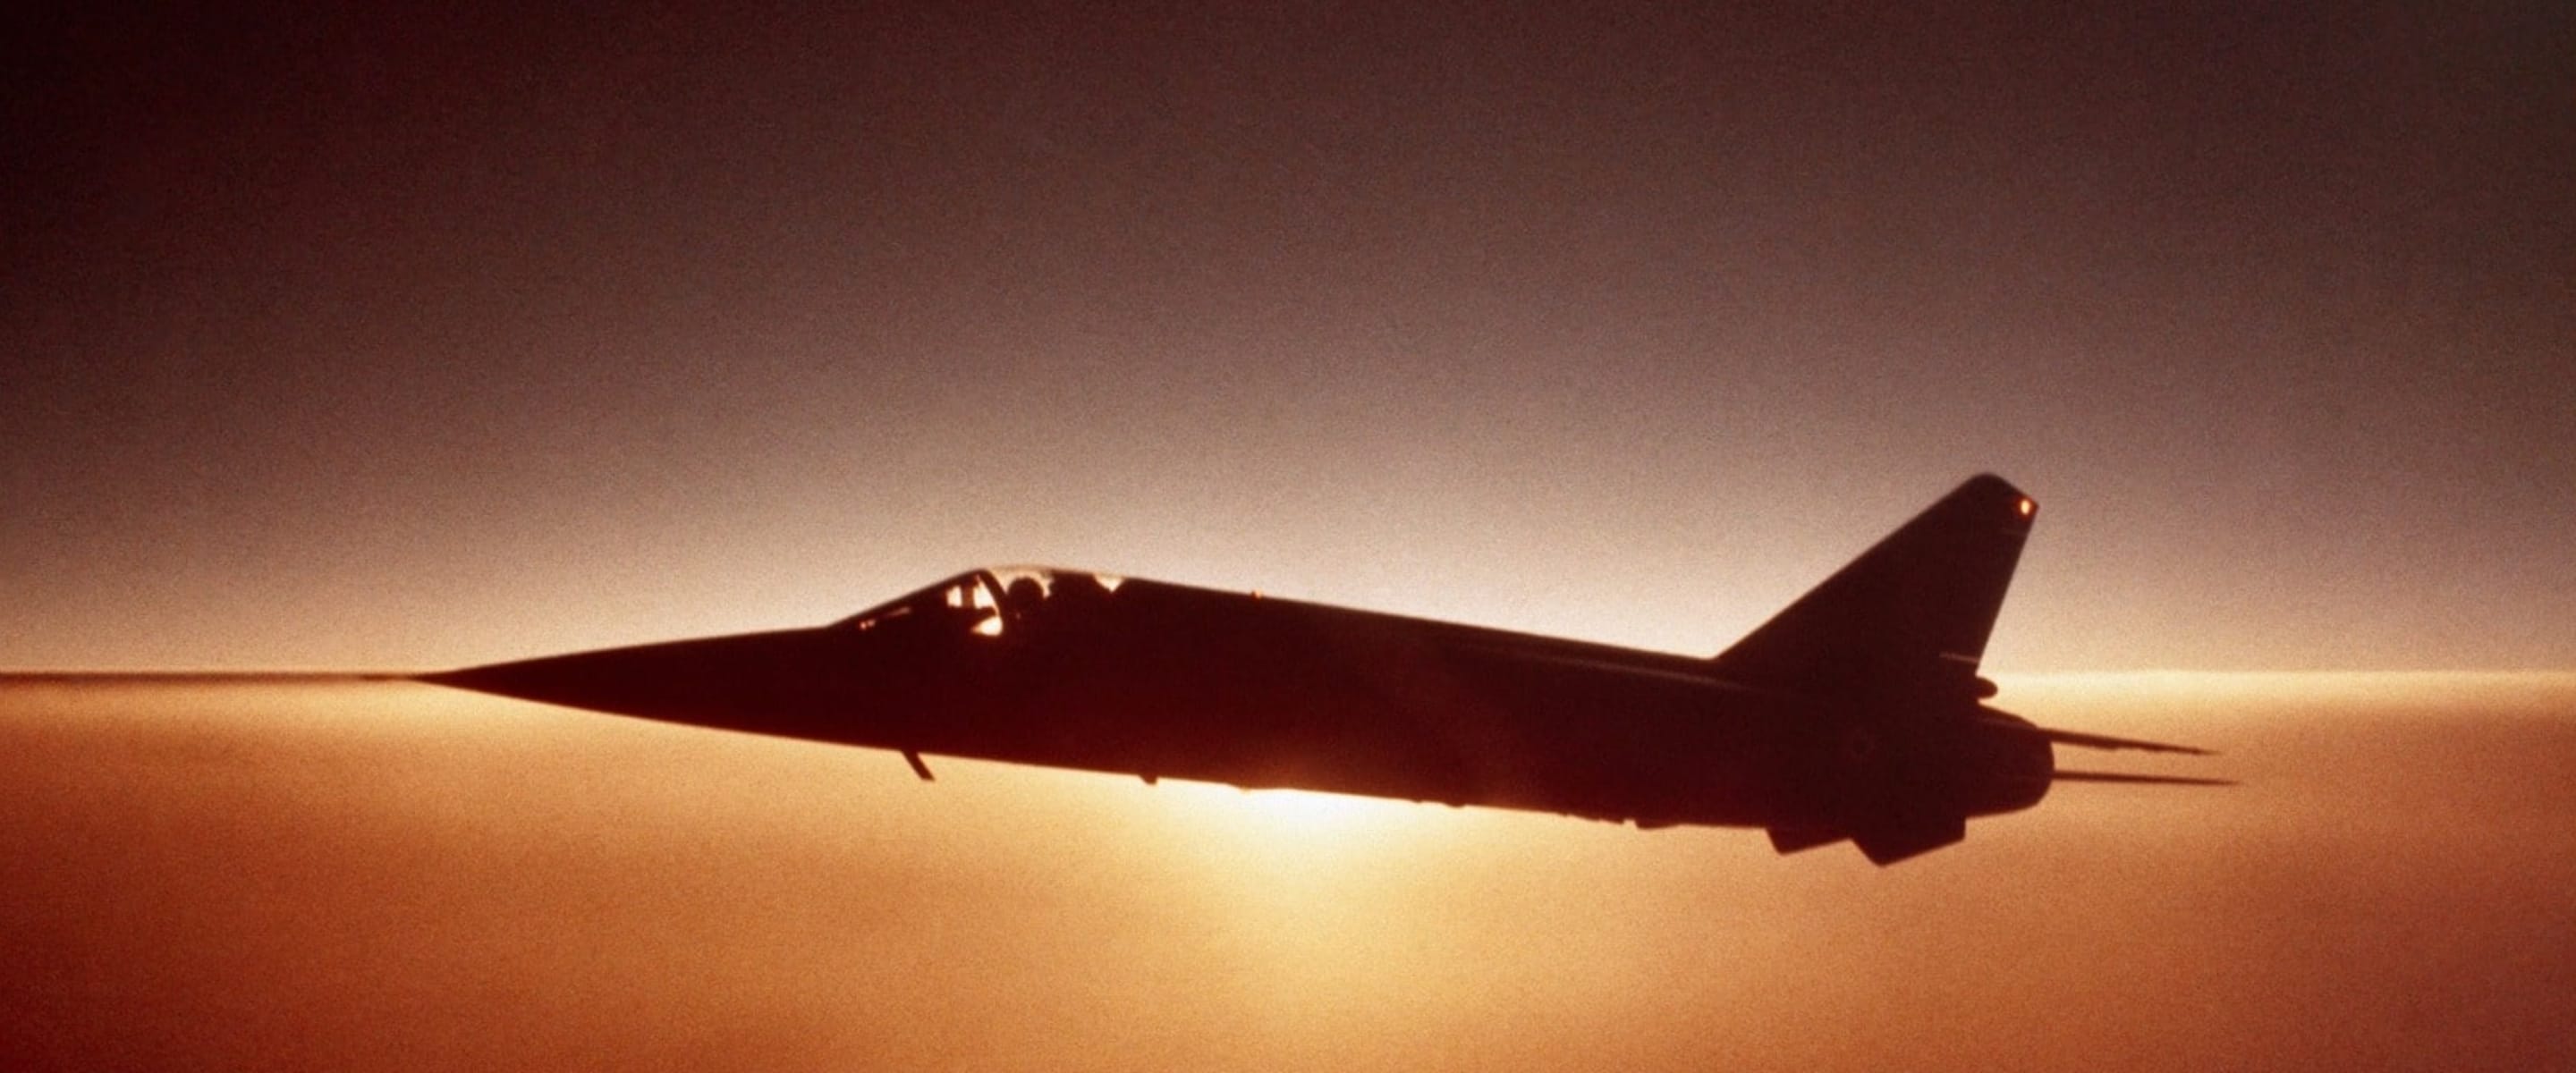 Mirage F1, in flight.